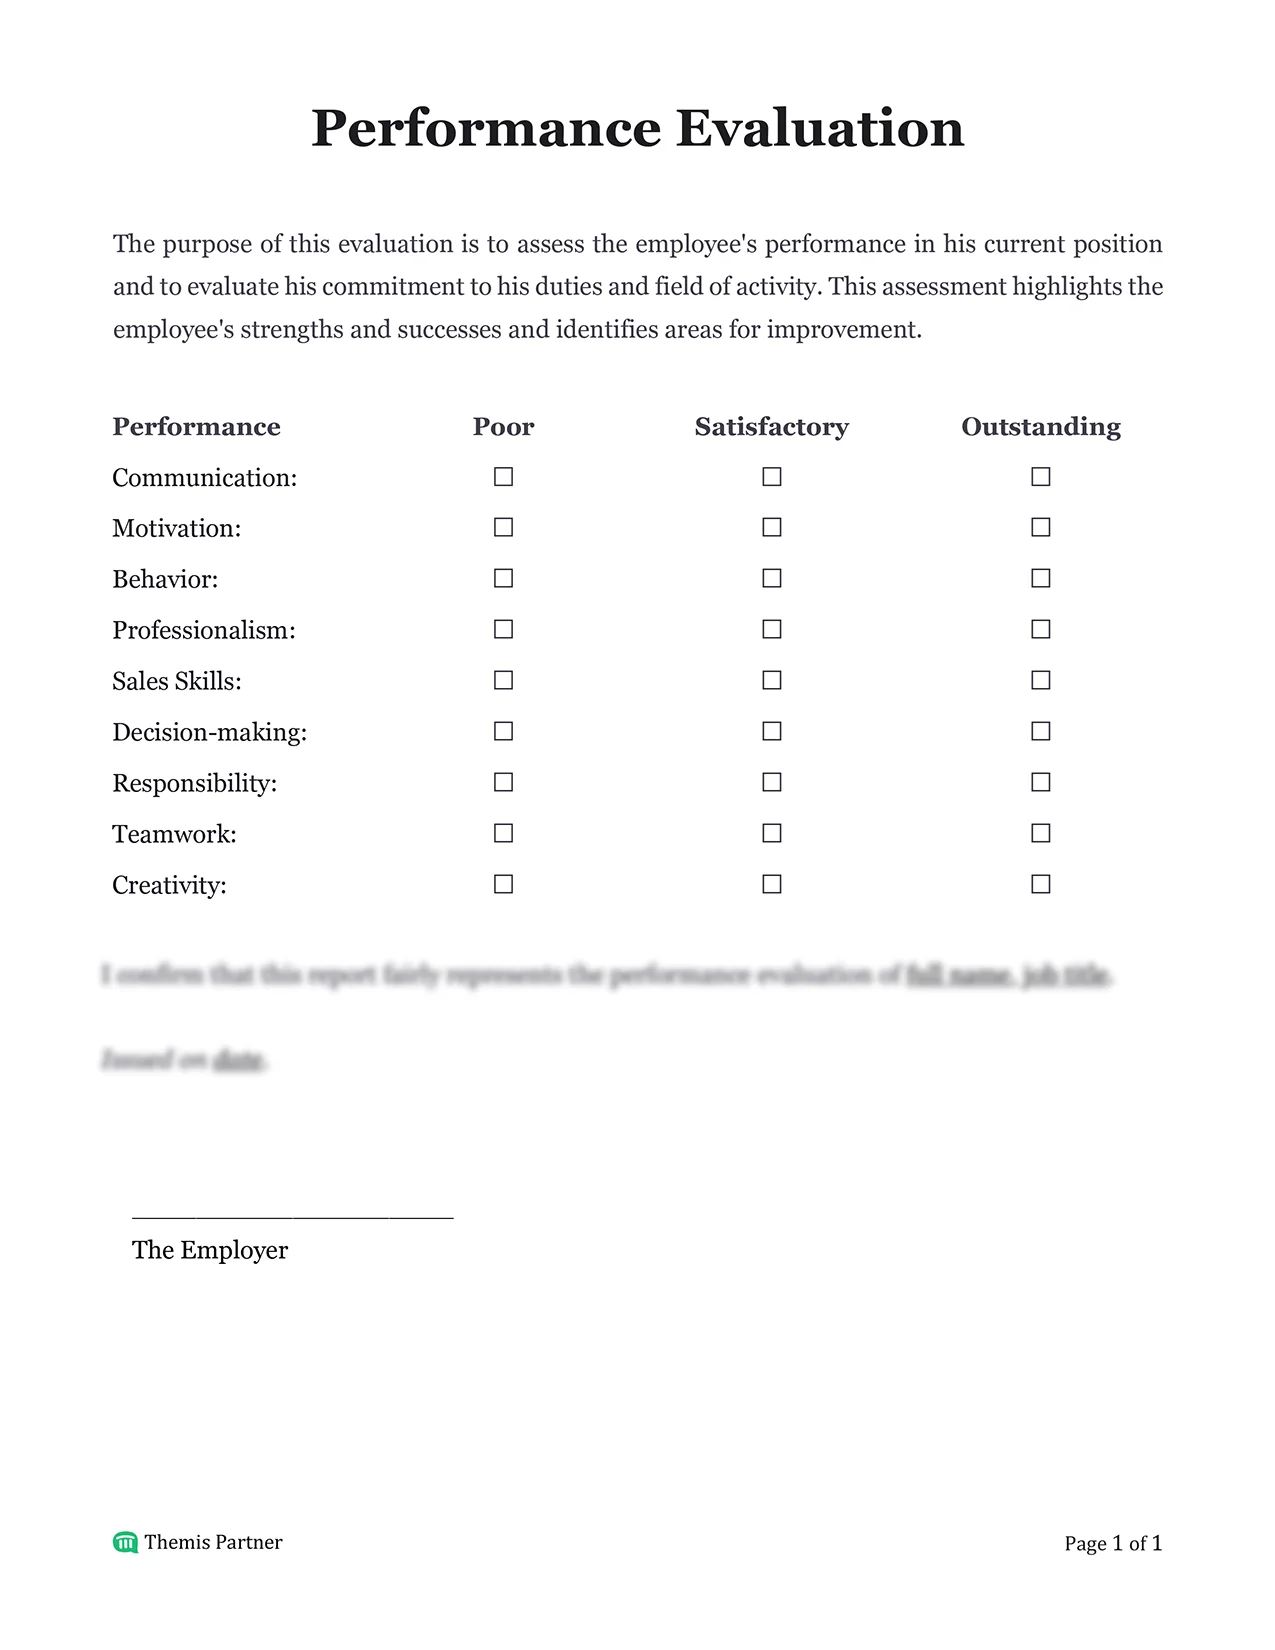 Employee performance evaluation Malaysia 1